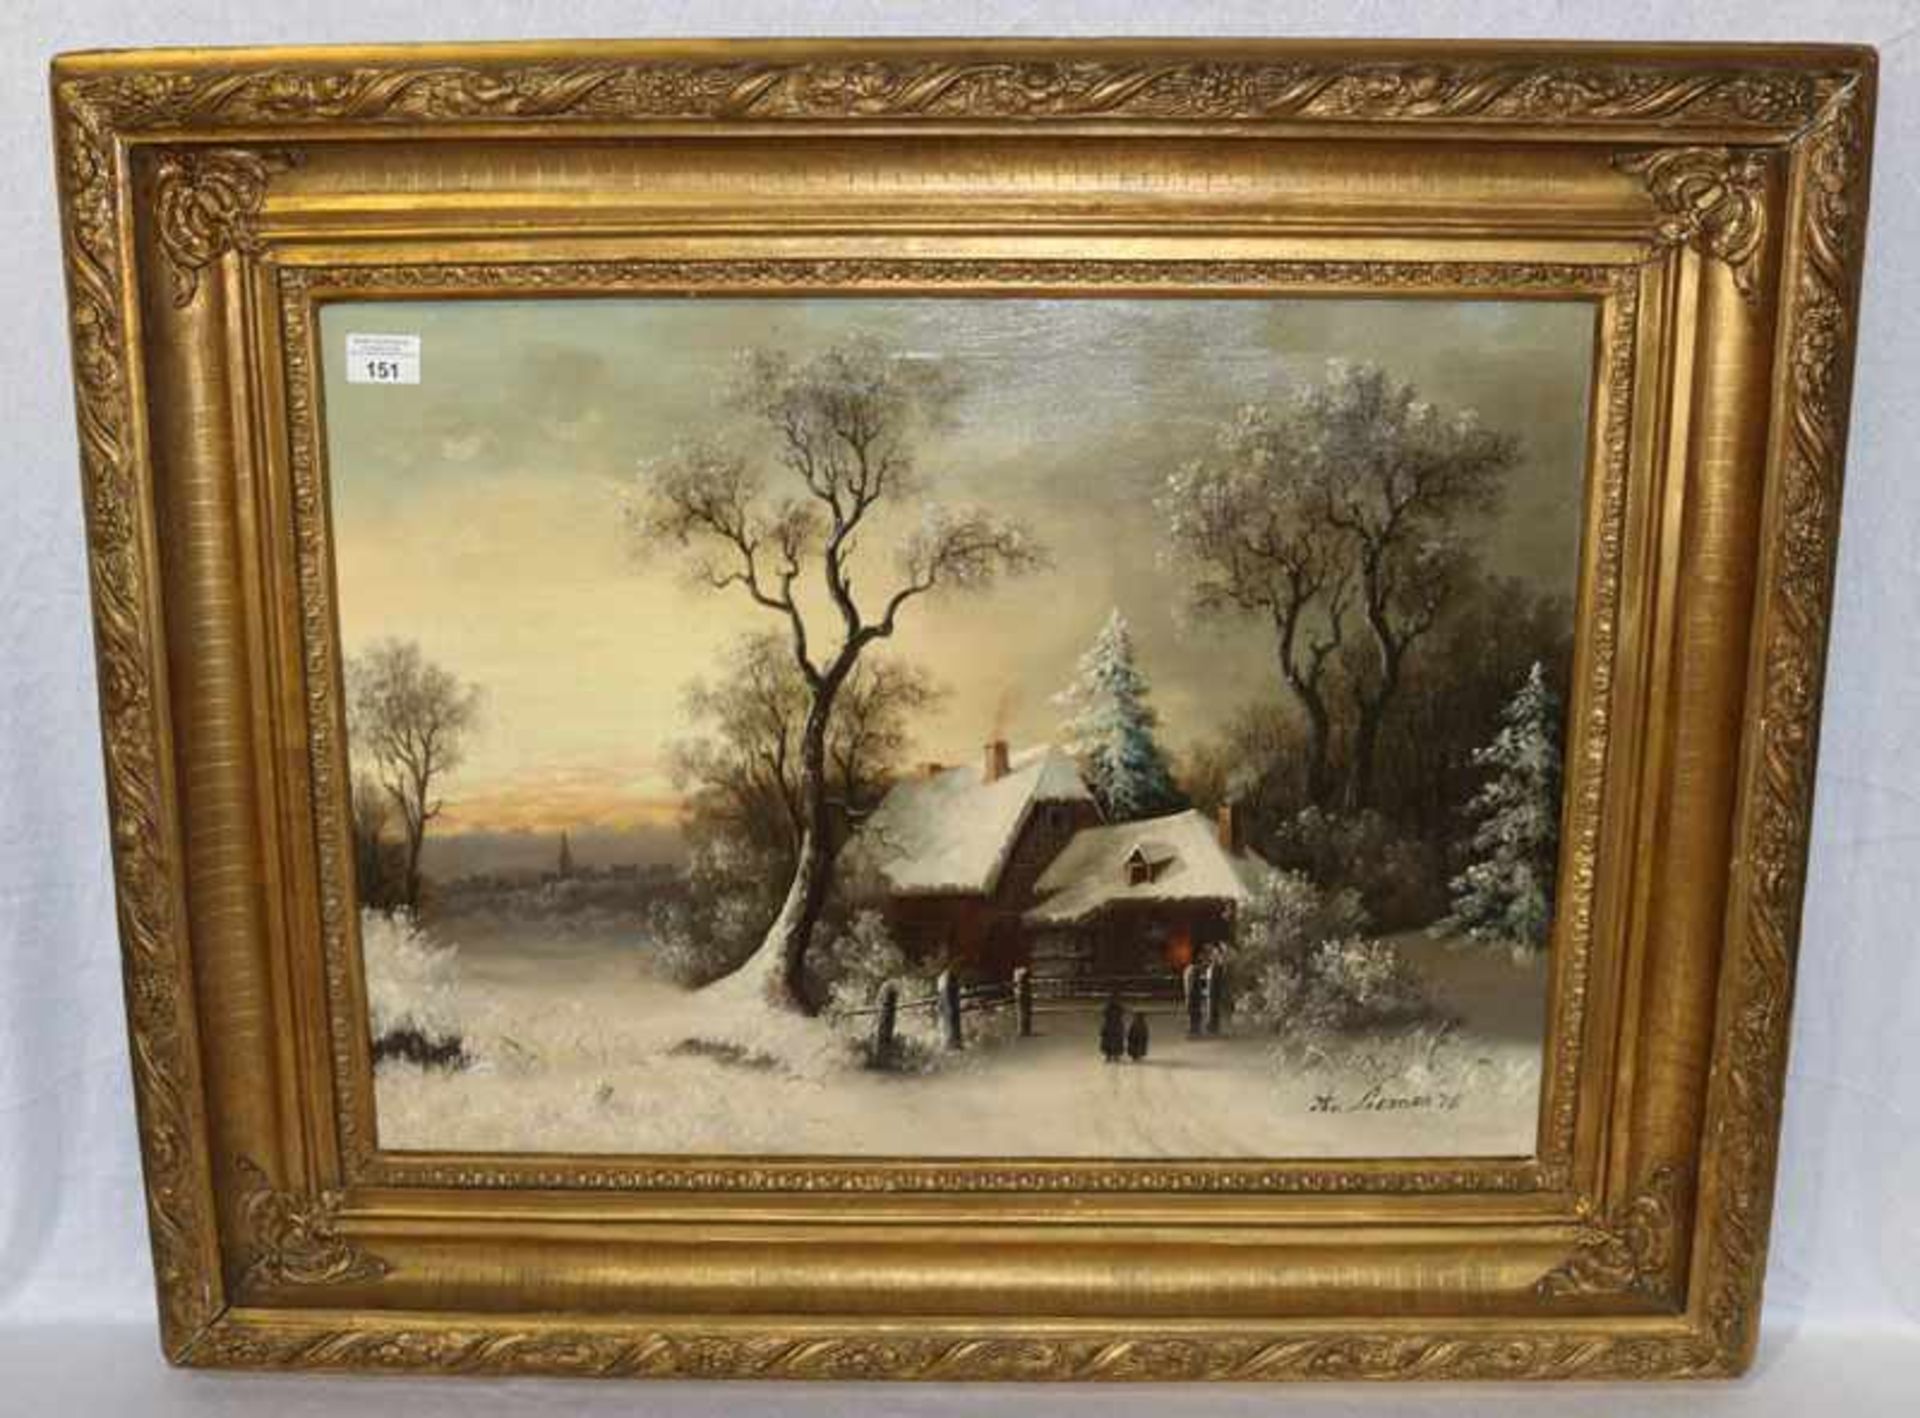 Gemälde ÖL/LW 'Winterlandschaft mit Haus', signiert A. Leman ?, datiert 76, gerahmt, Rahmen